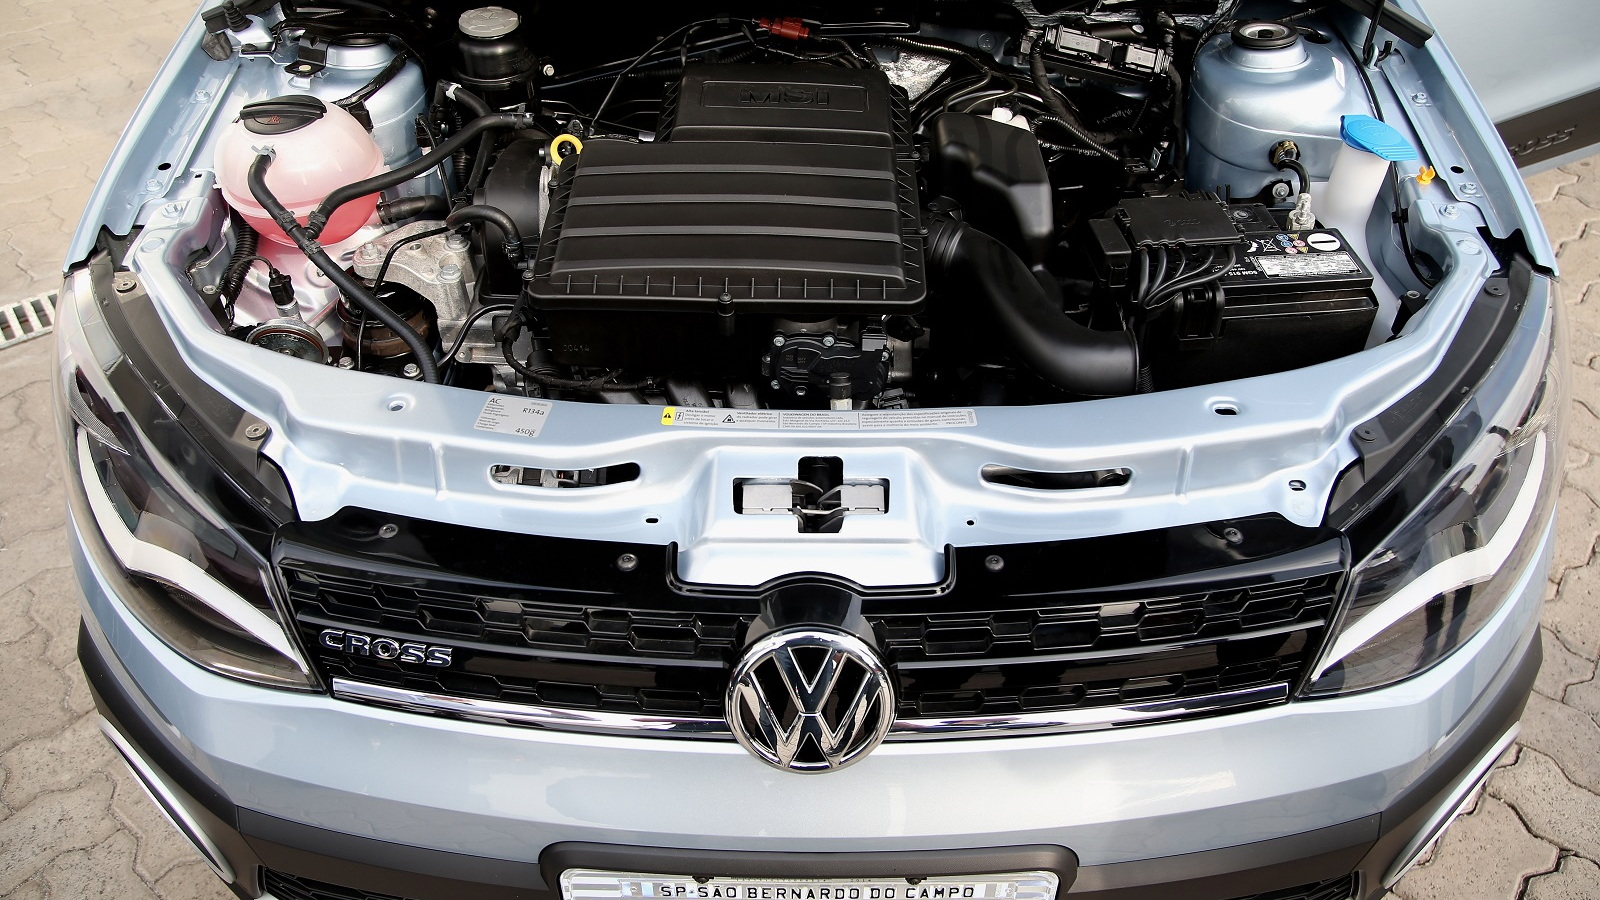 Engine compartment of Volkswagen Saveiro, Brazilian flex-fuel vehicle